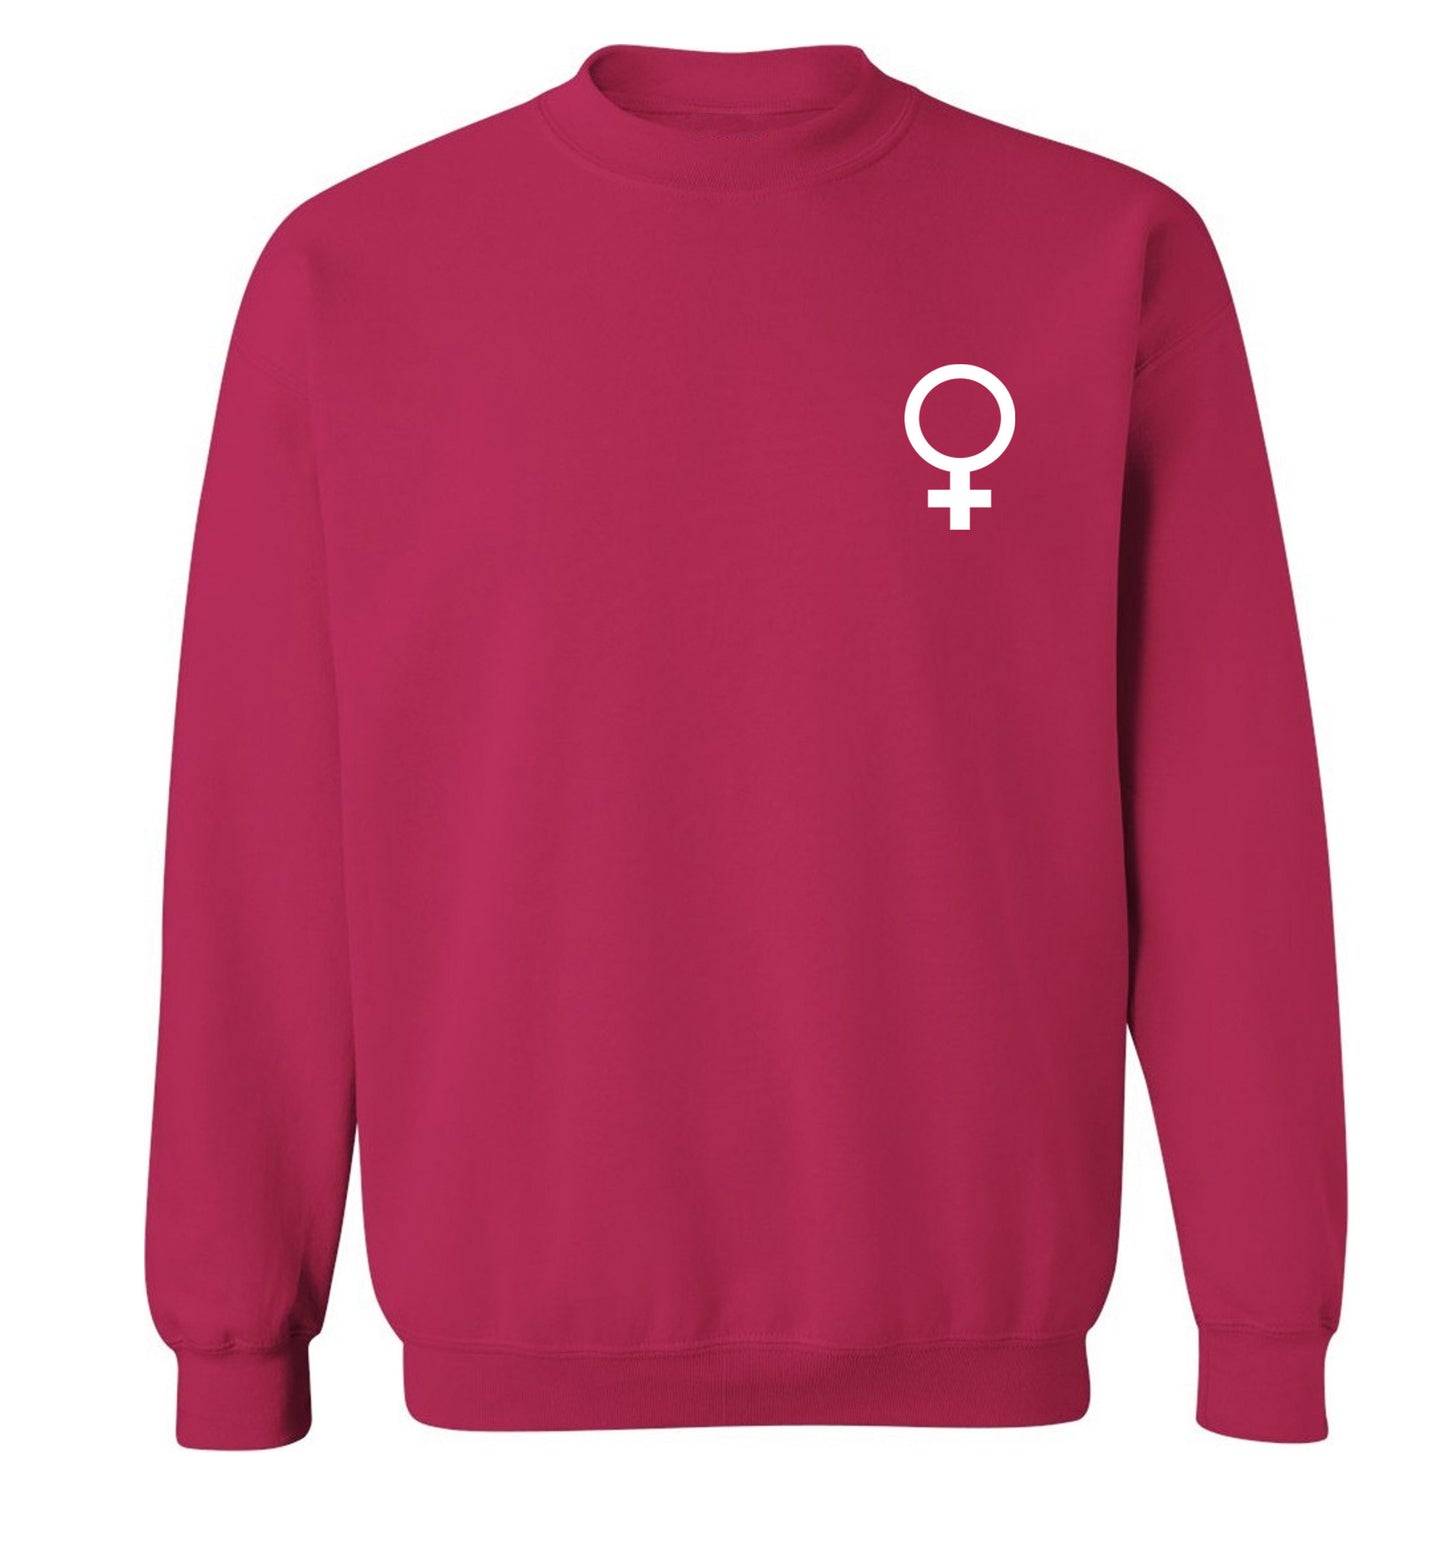 Female pocket symbol Adult's unisex pink Sweater 2XL